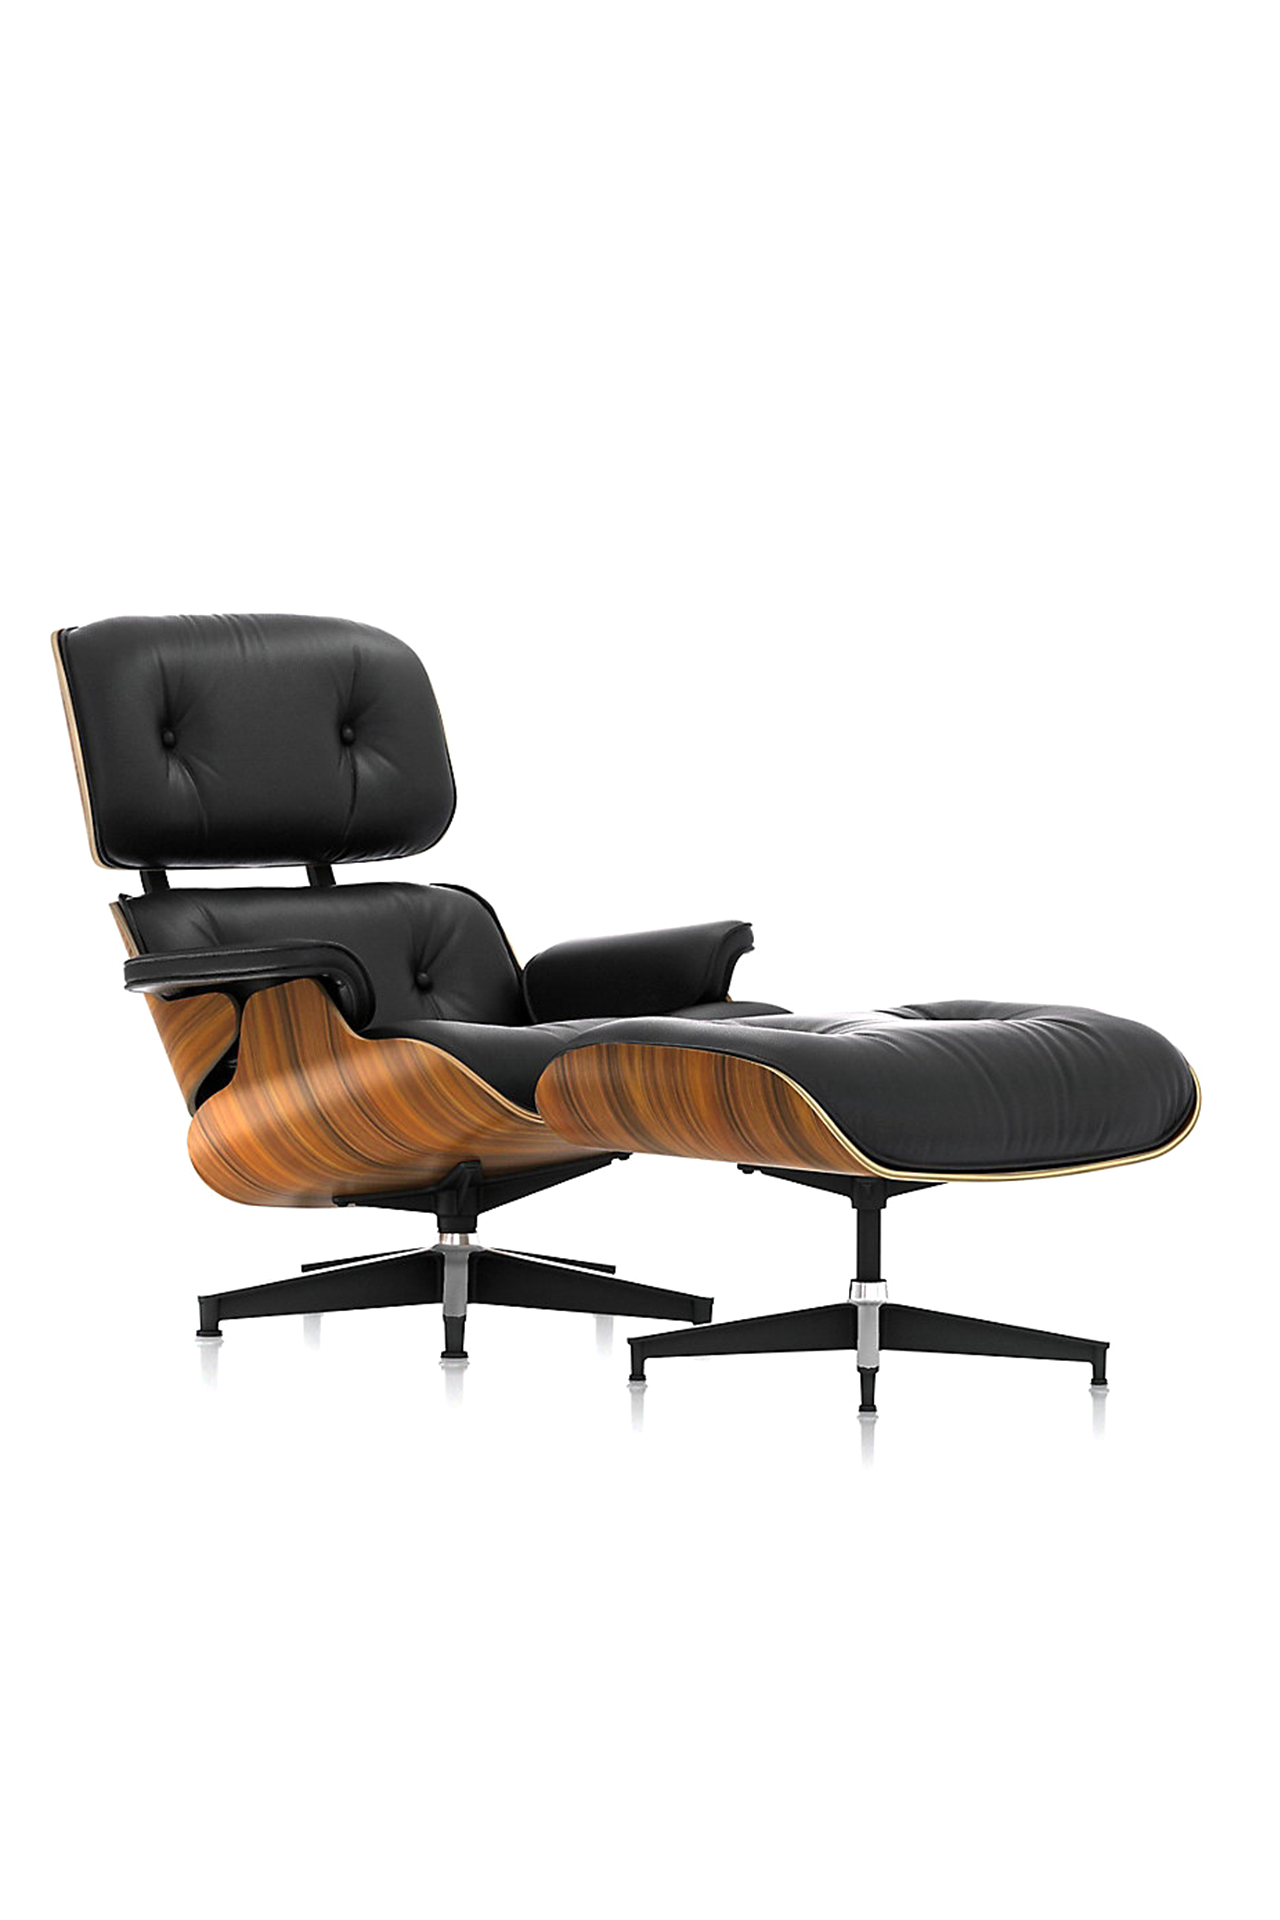 Herman Miller Eames Lounge Chair and Ottoman | A.K. Rikk's